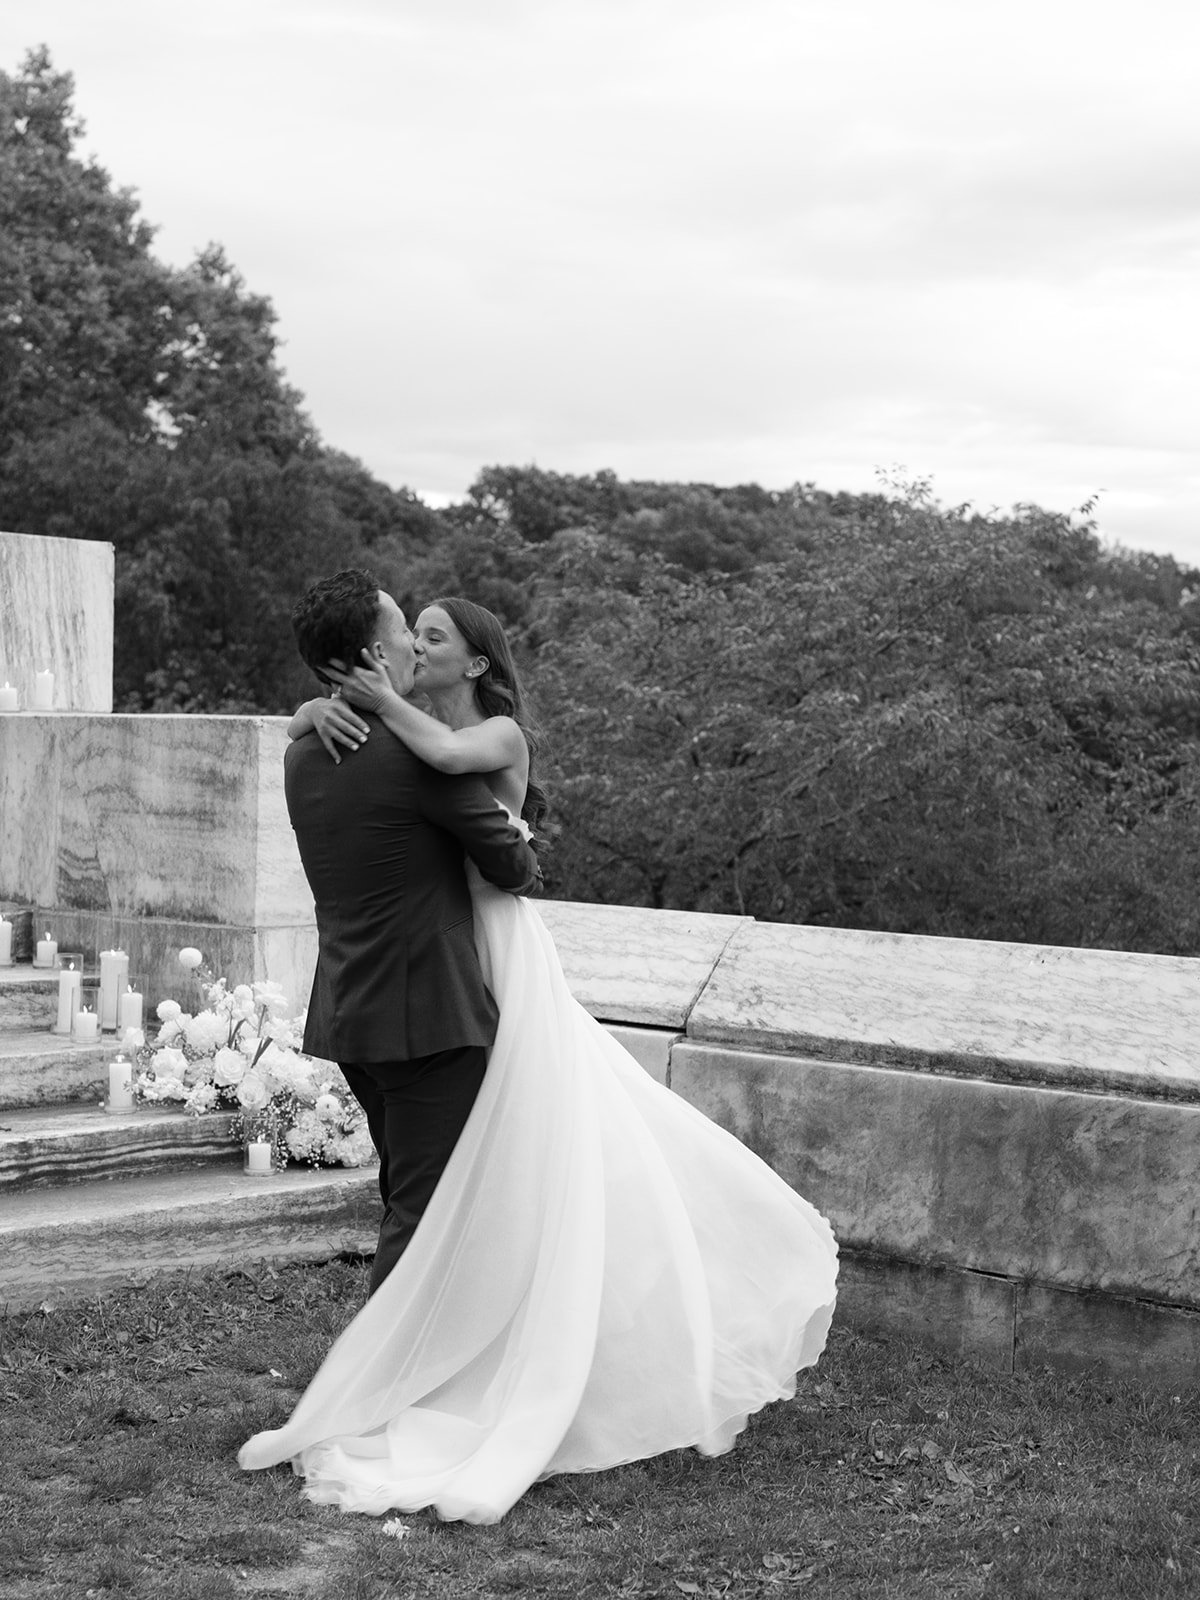 Best-Austin-Wedding-Photographers-Elopement-Film-35mm-Asheville-Santa-Barbara-1047.jpg